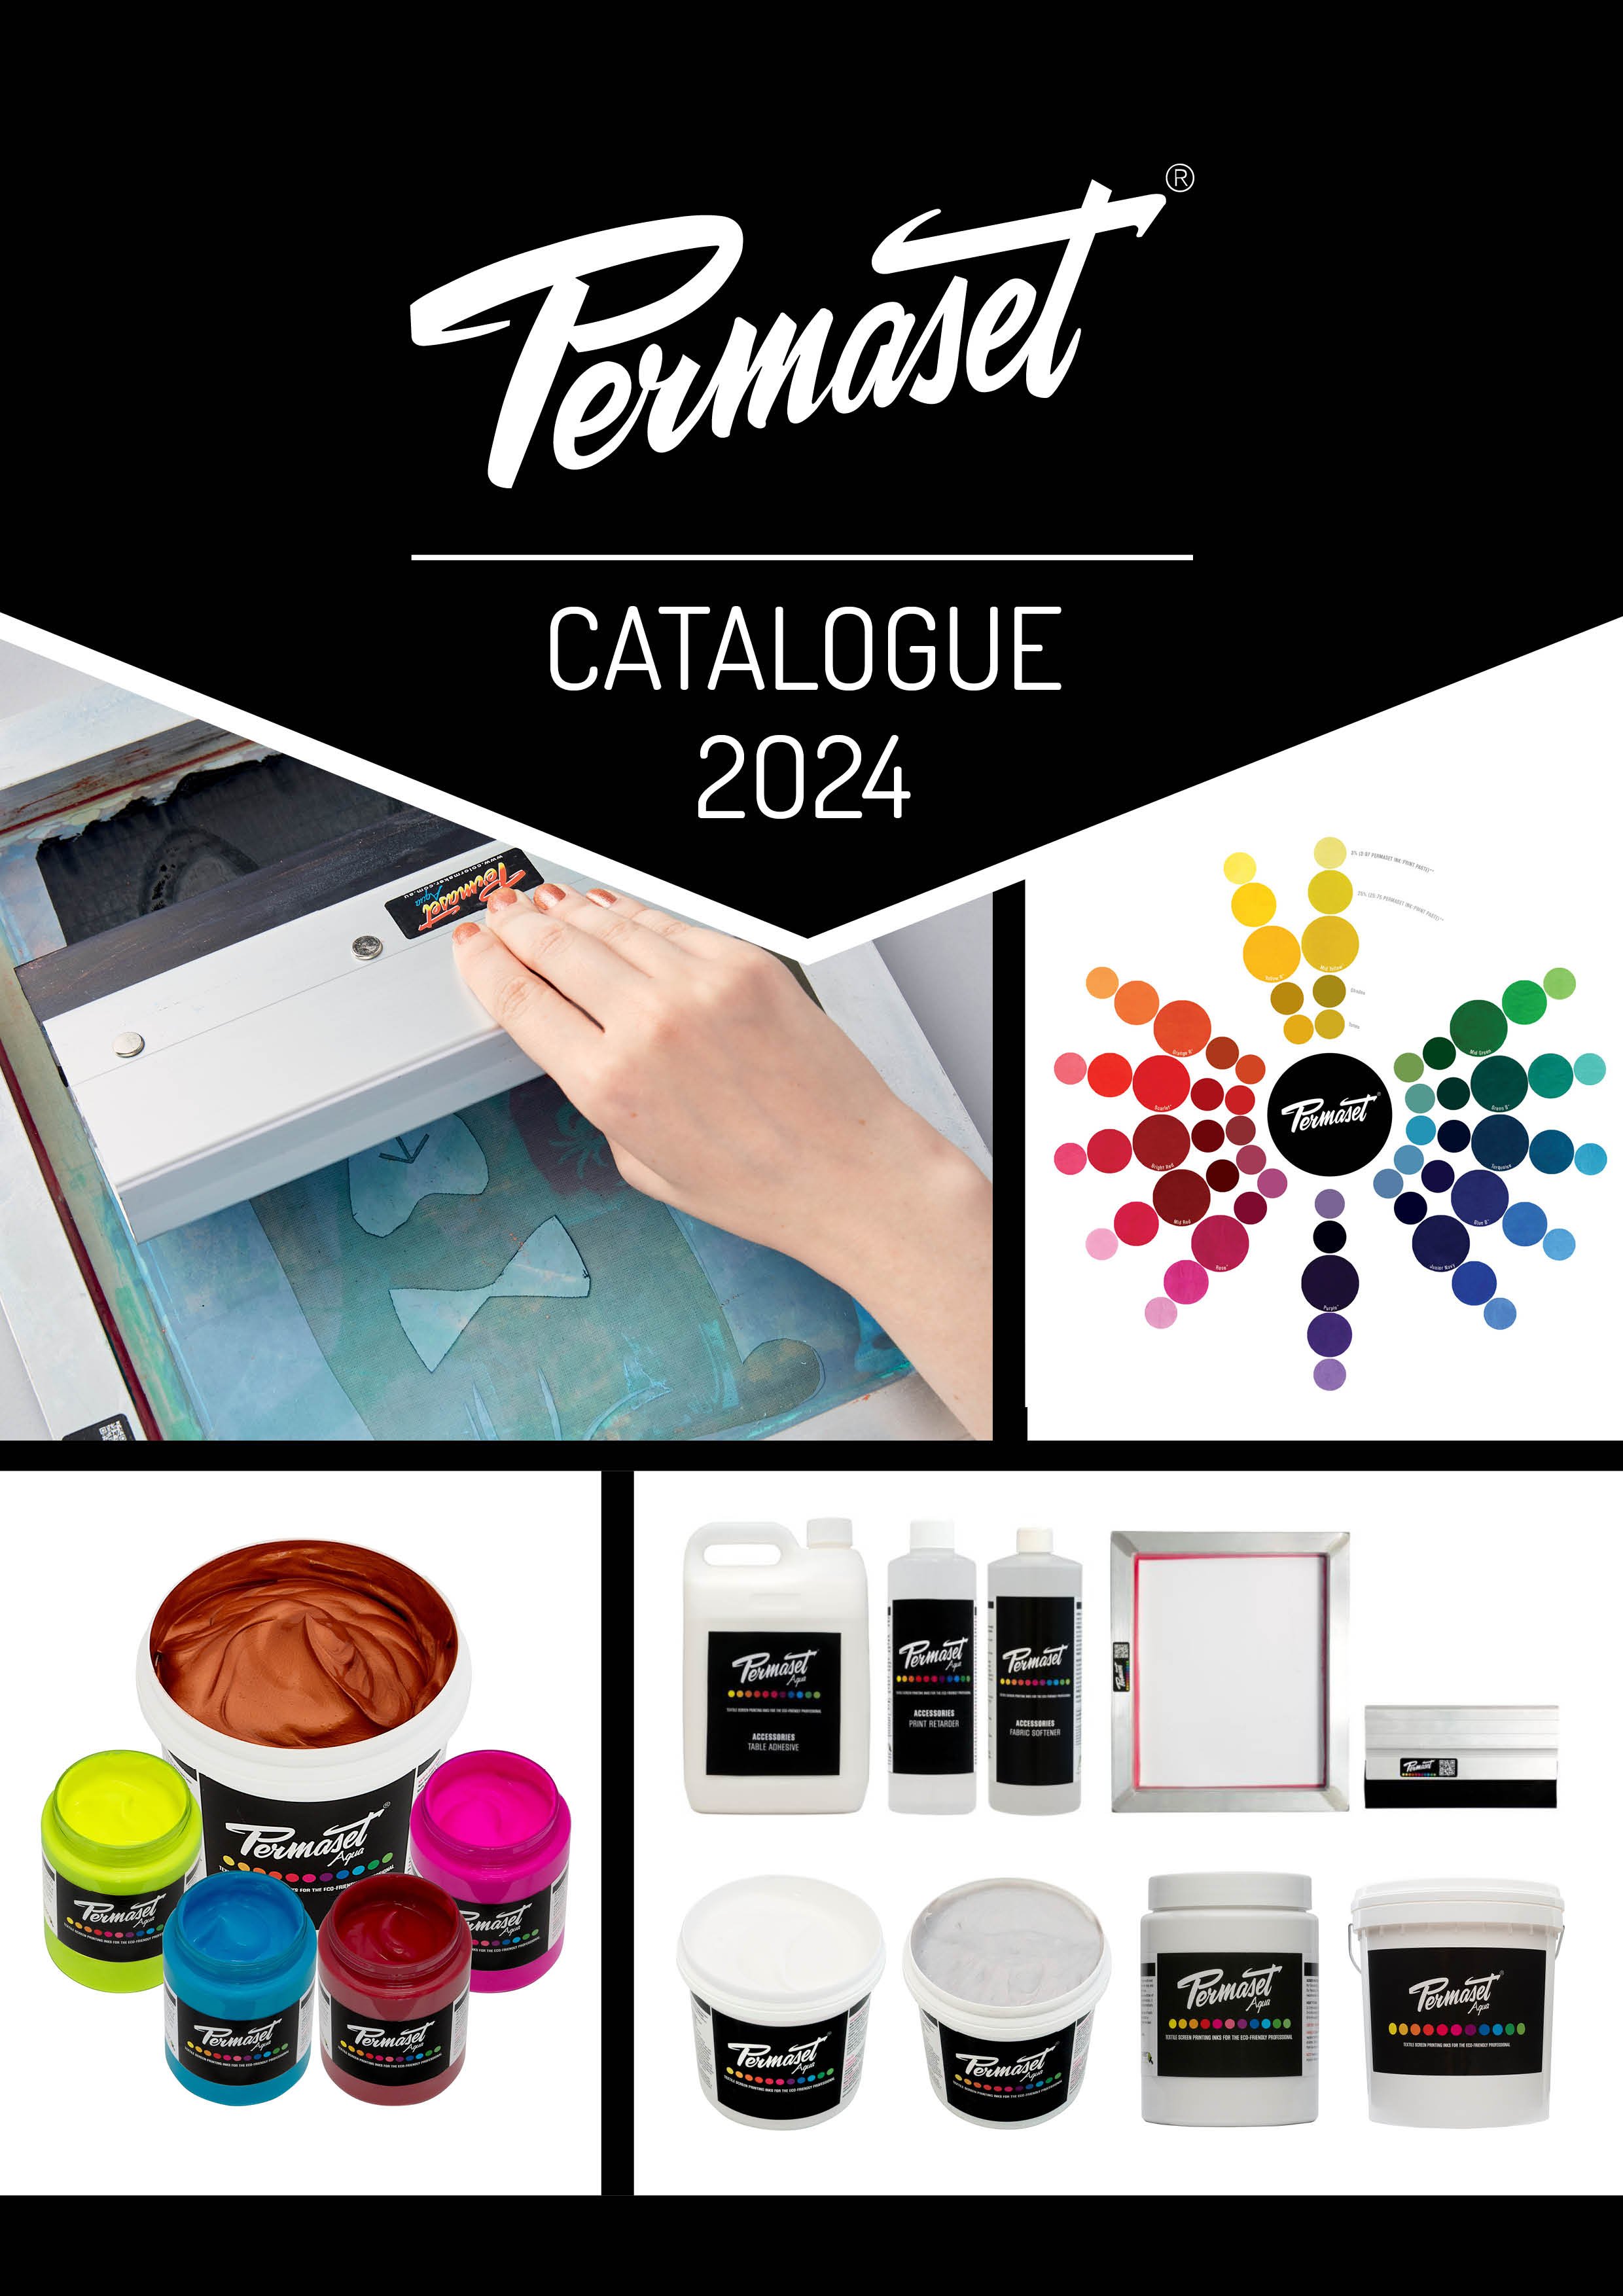 Permaset Brand Catalogue 2024